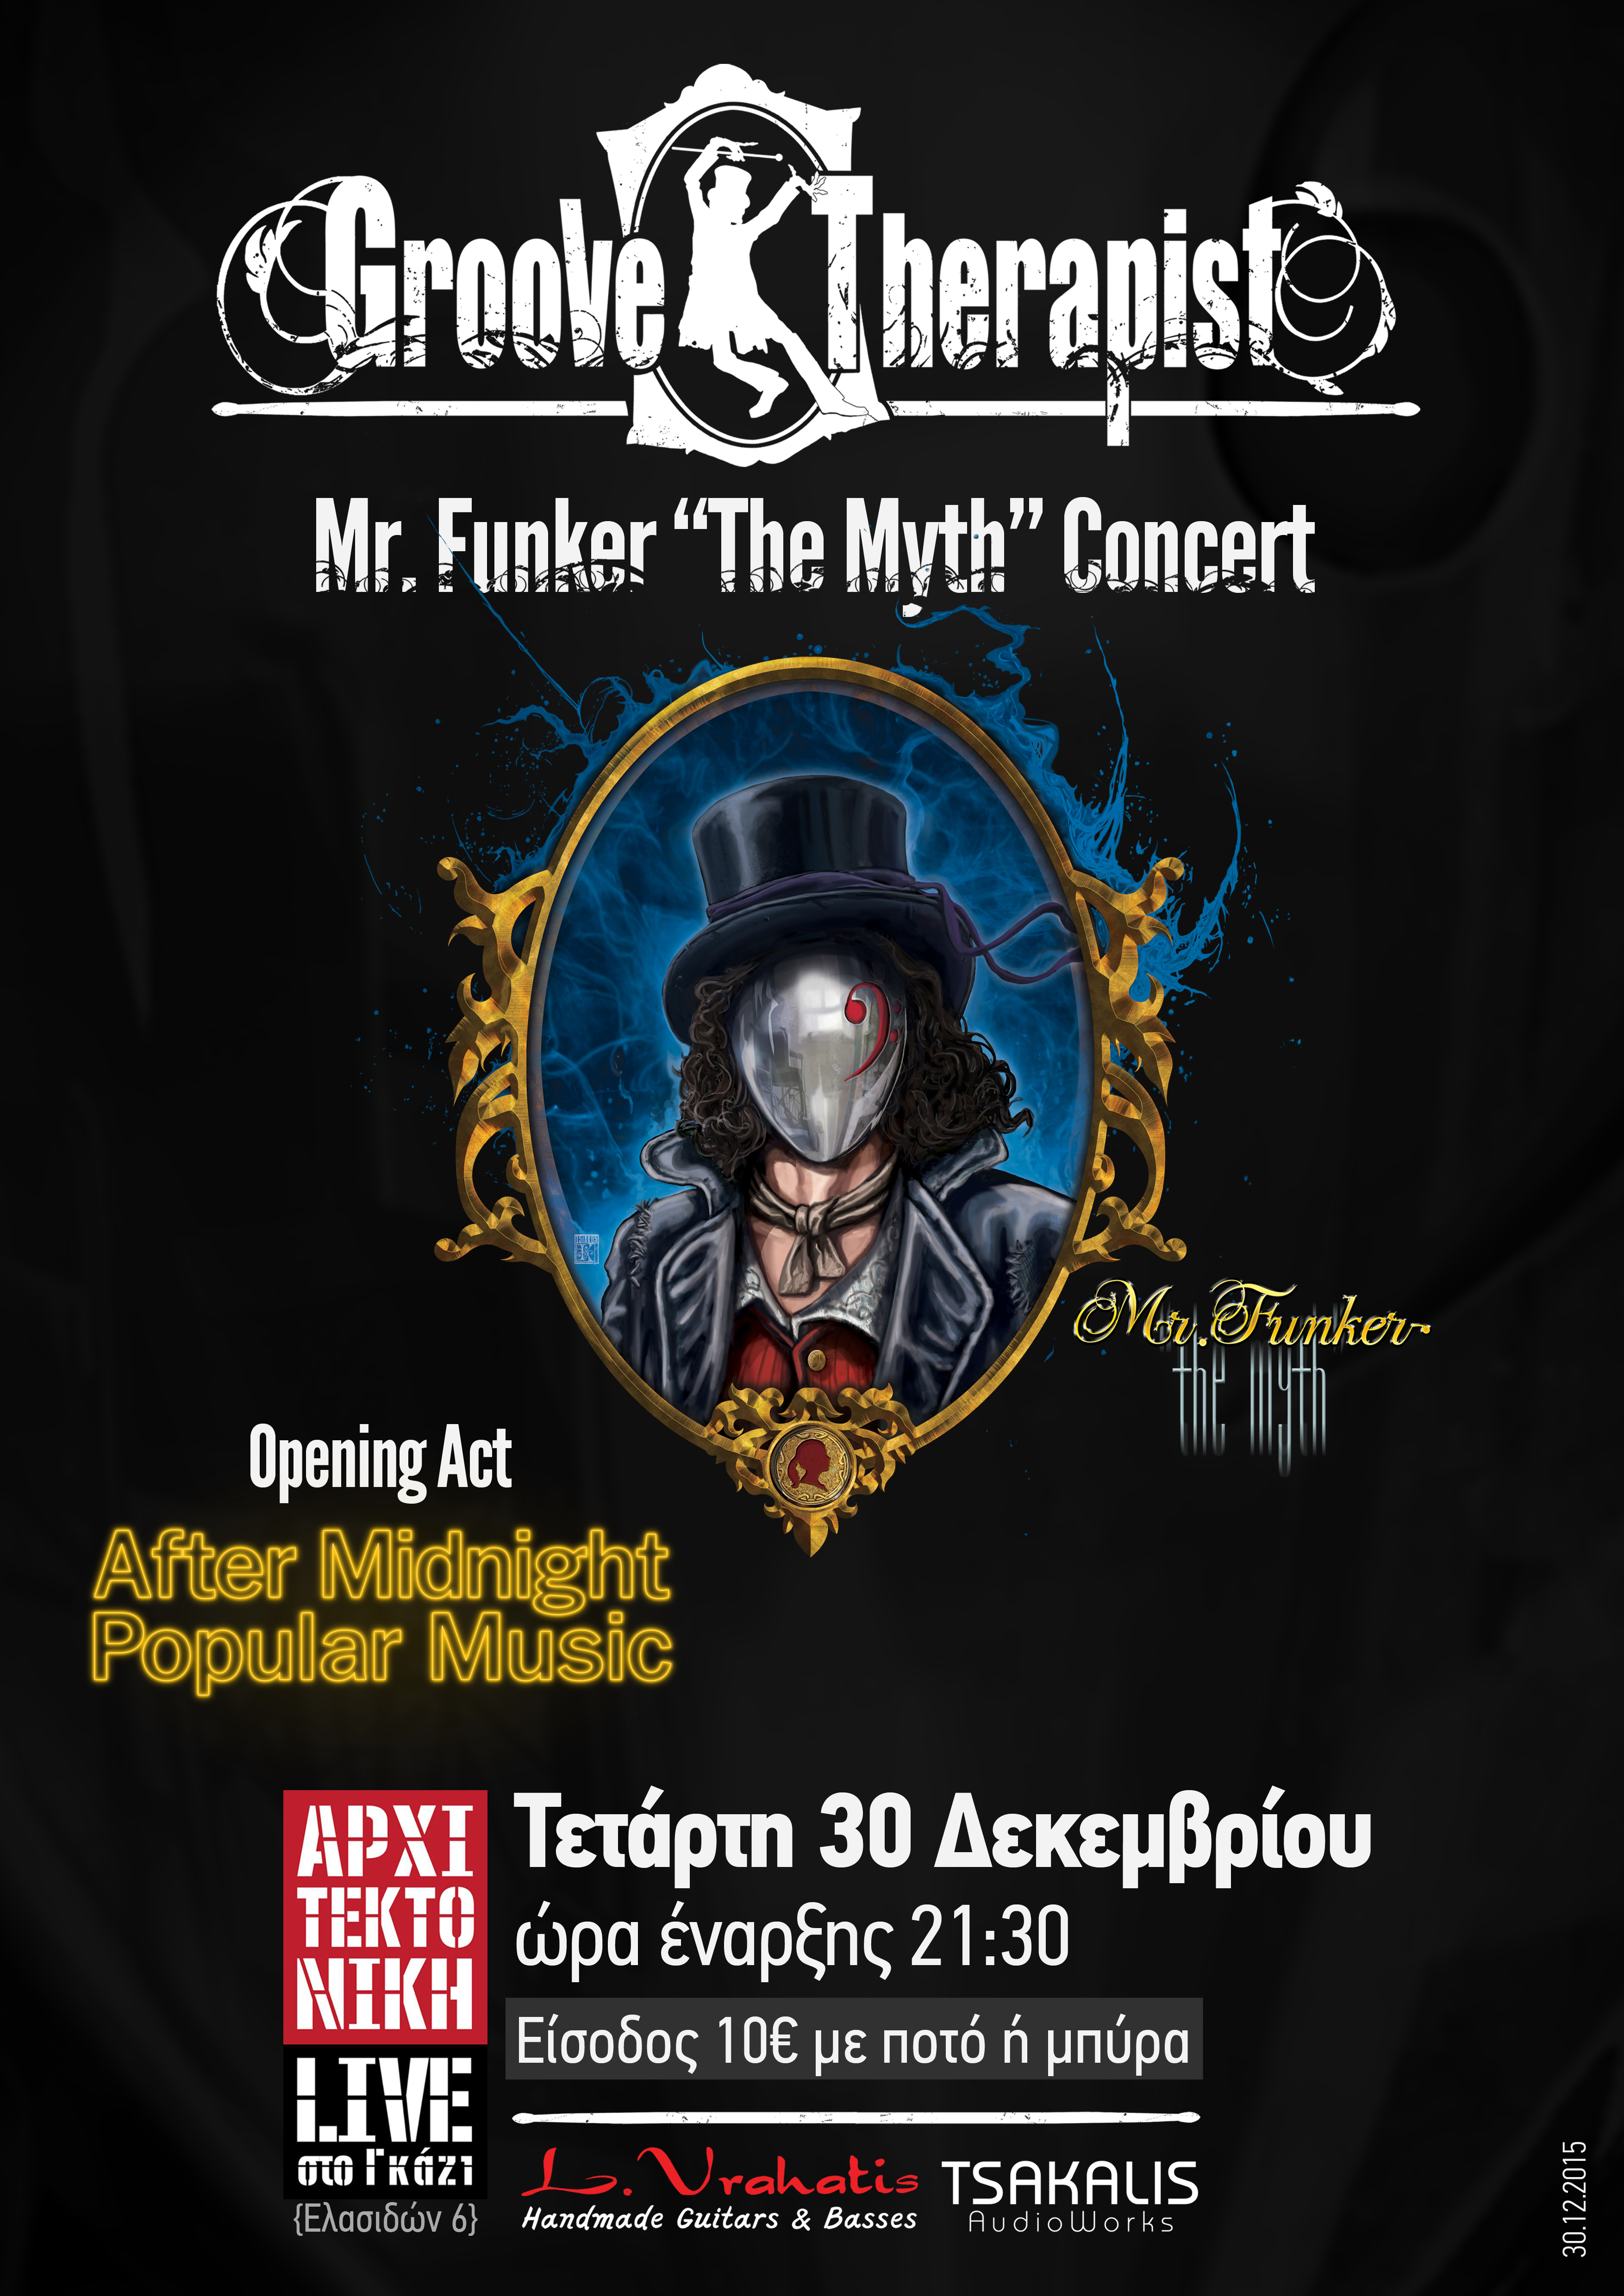 Mr. Funker "The Myth" Concert